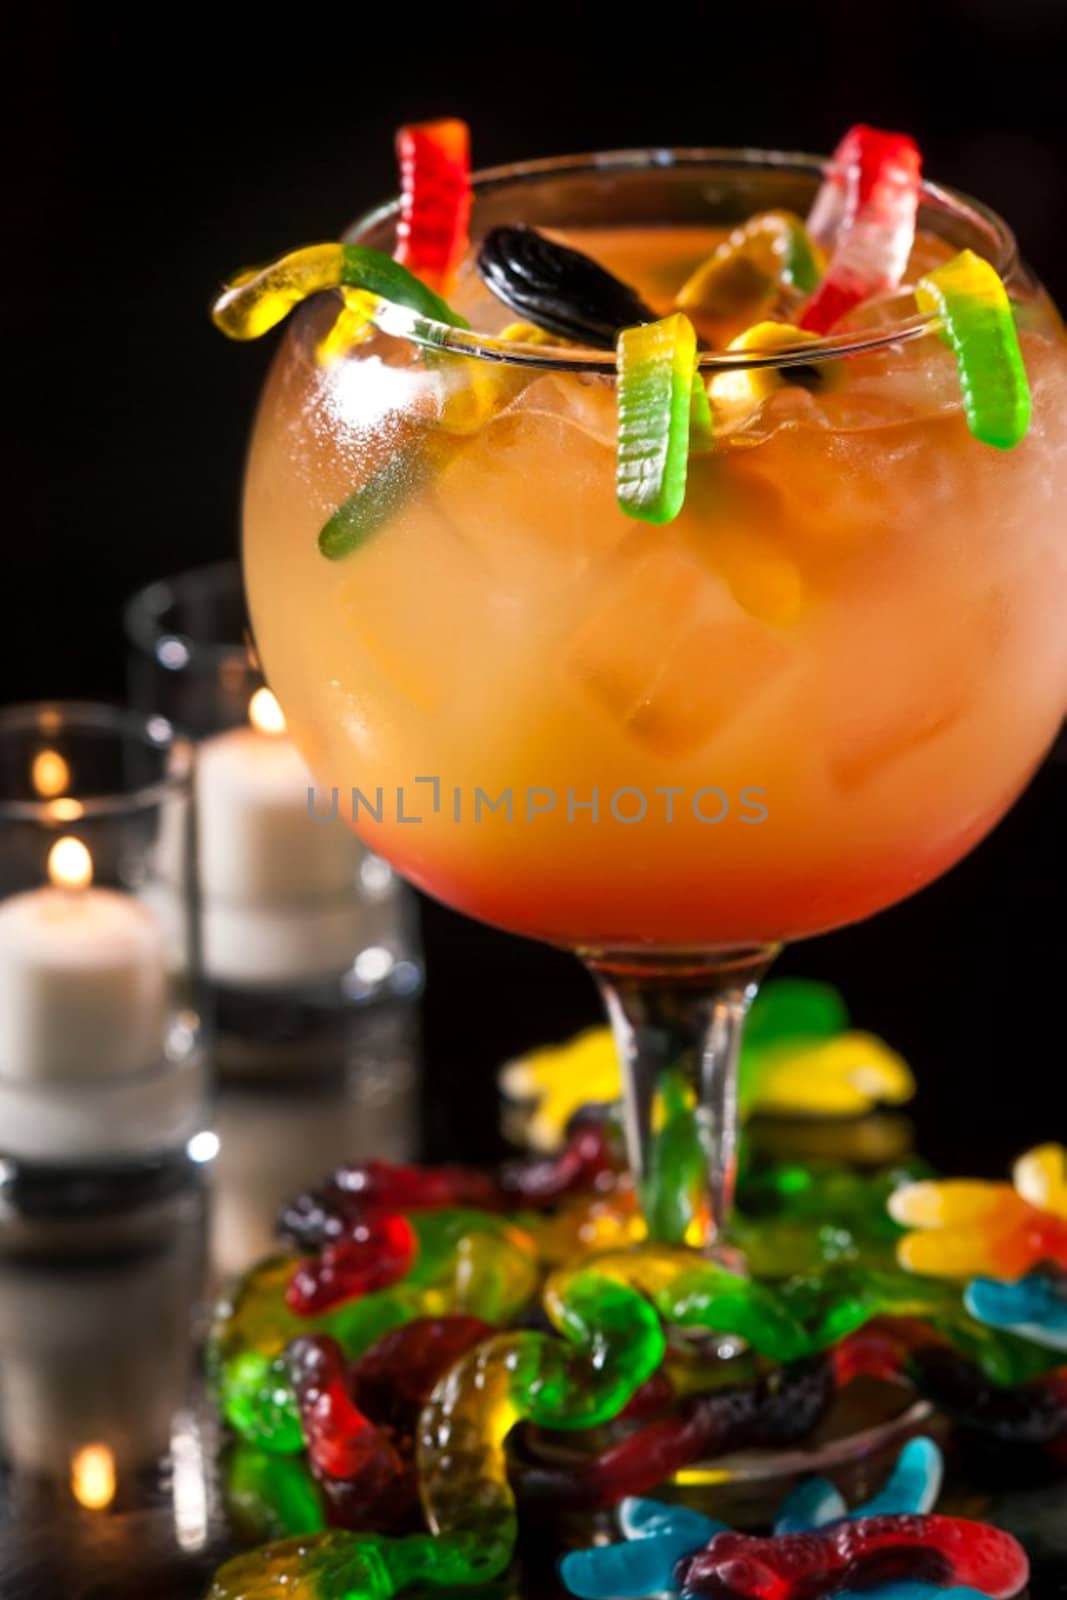 jelly cocktail by mereutaandrei